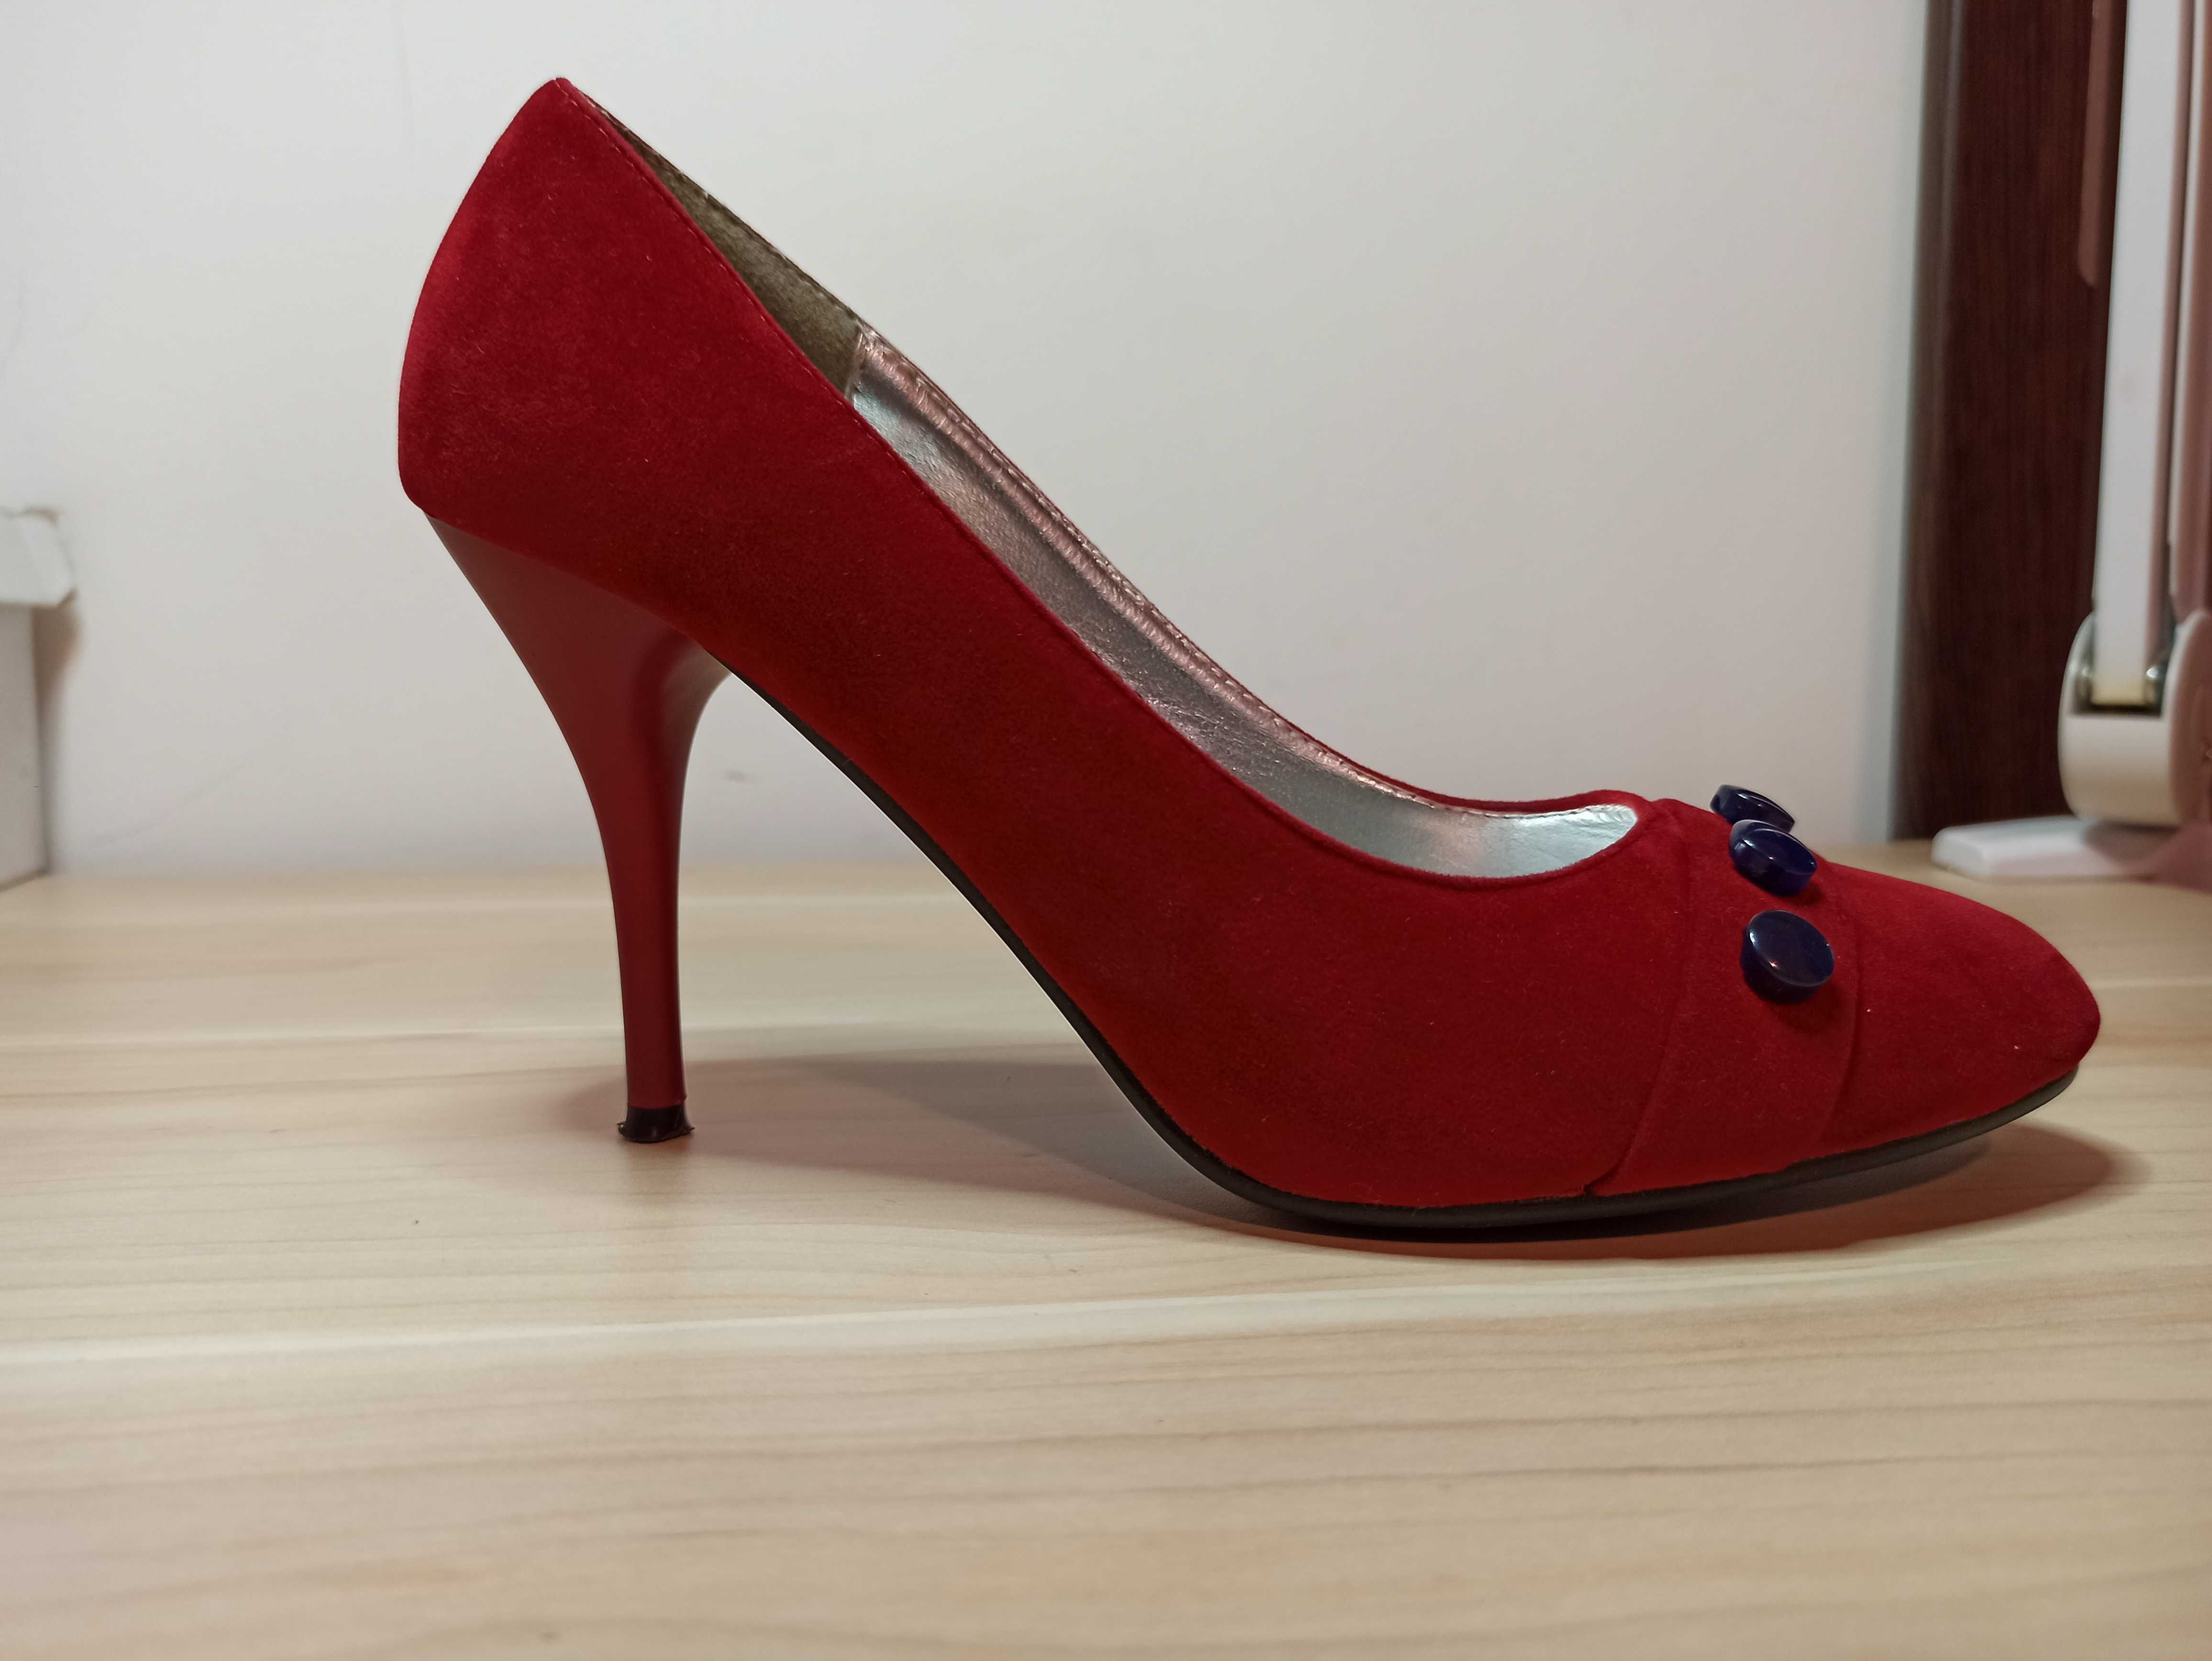 Pantofi rosii dama masura 39